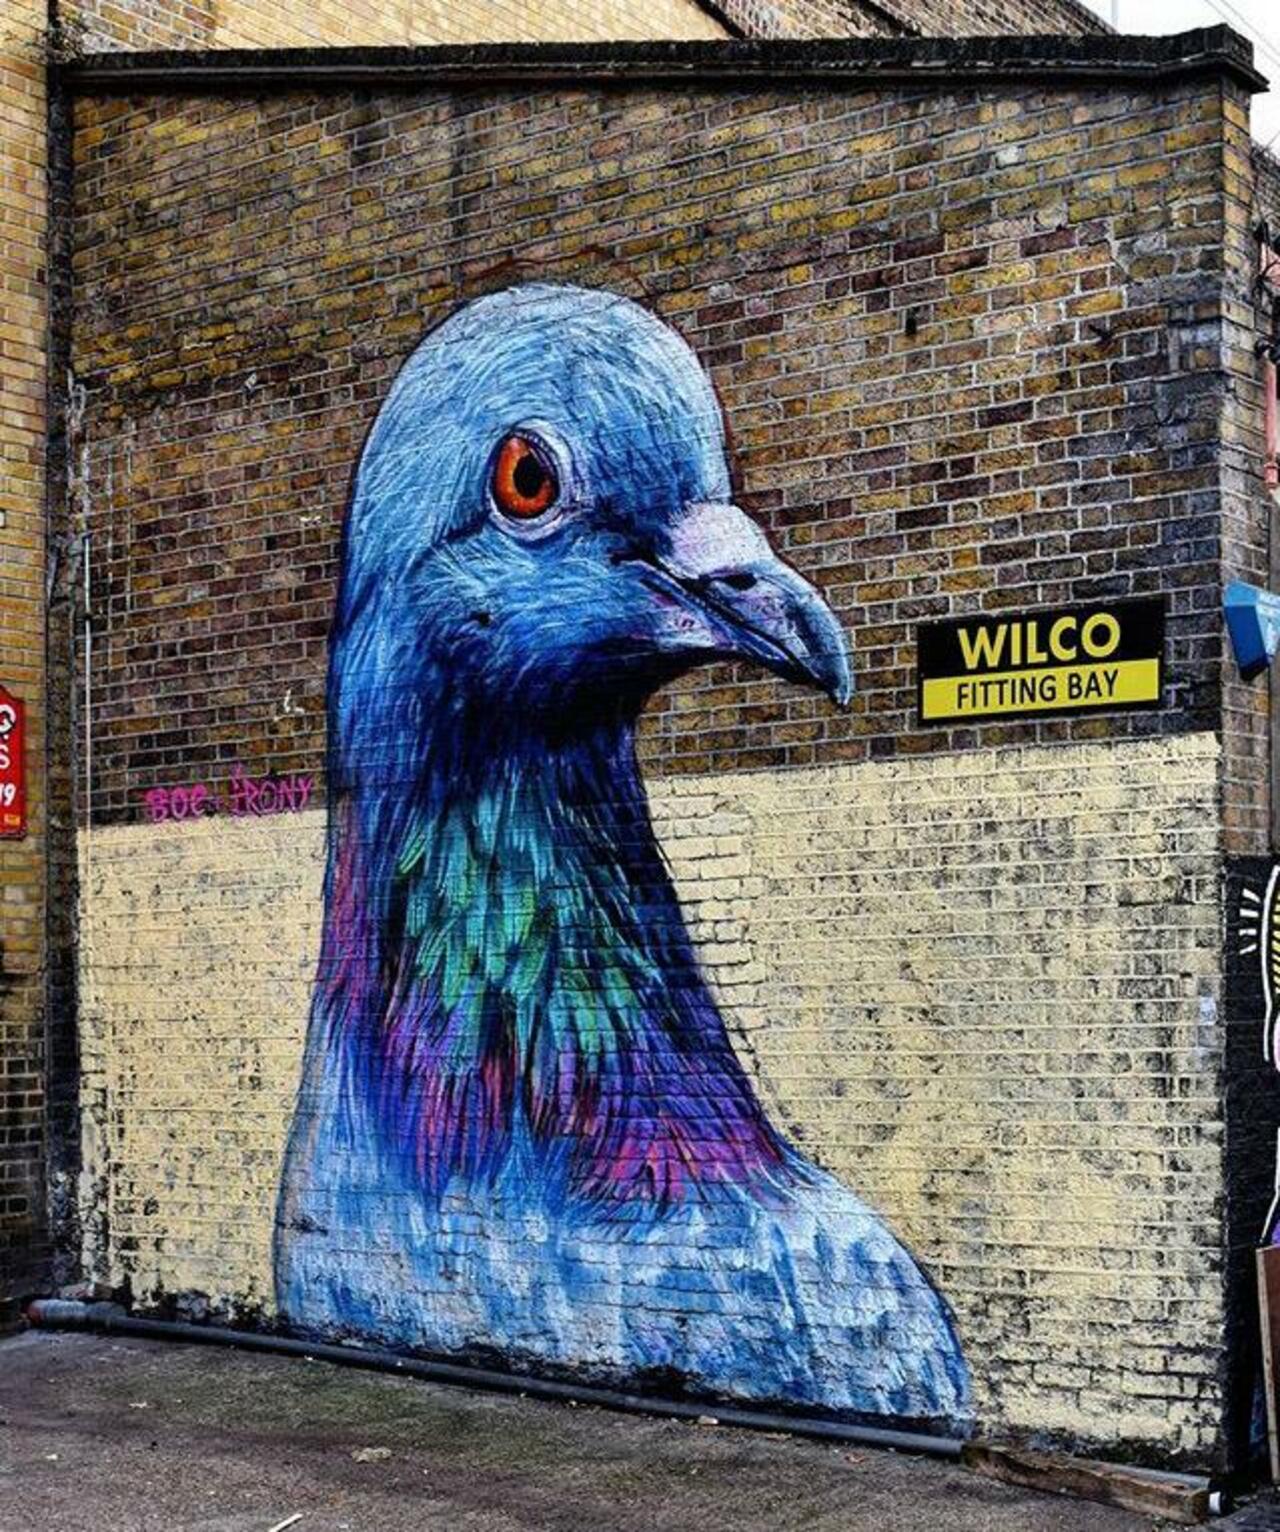 Street Art by Placee Boe & whoamirony in London 

#art #graffiti #mural #streetart http://t.co/XbpJbyNkwa